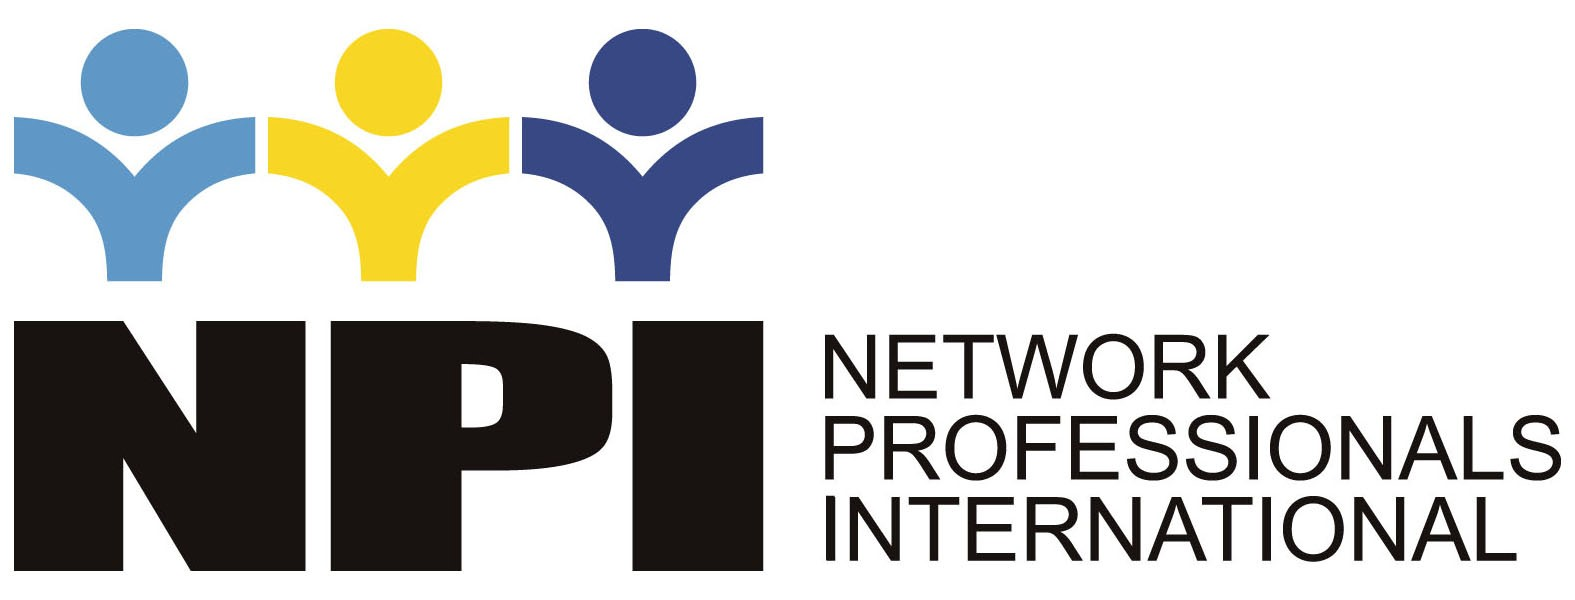 Network Professionals International